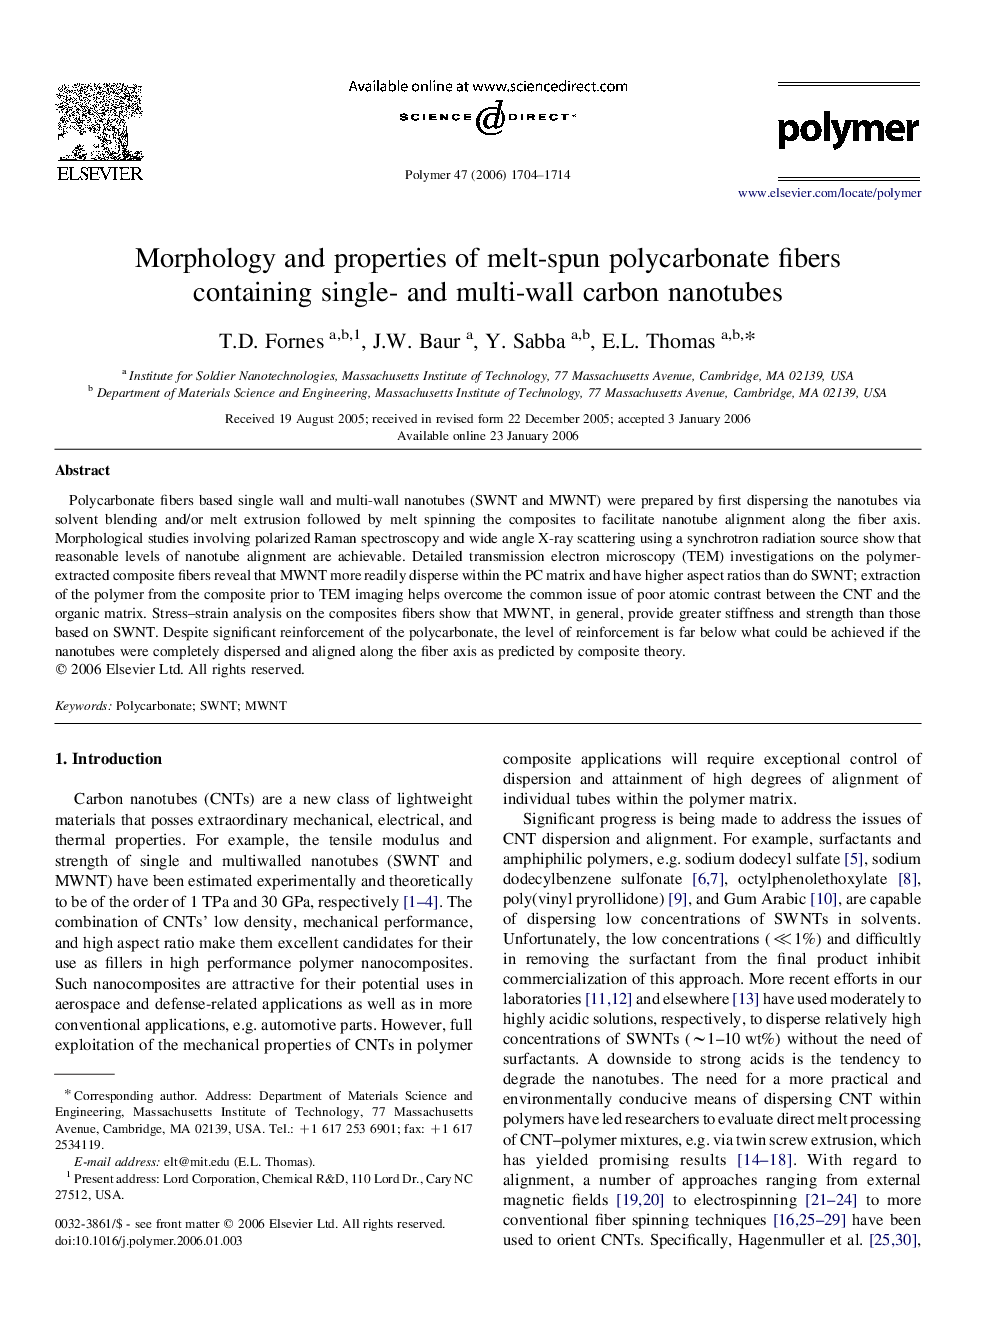 Morphology and properties of melt-spun polycarbonate fibers containing single- and multi-wall carbon nanotubes